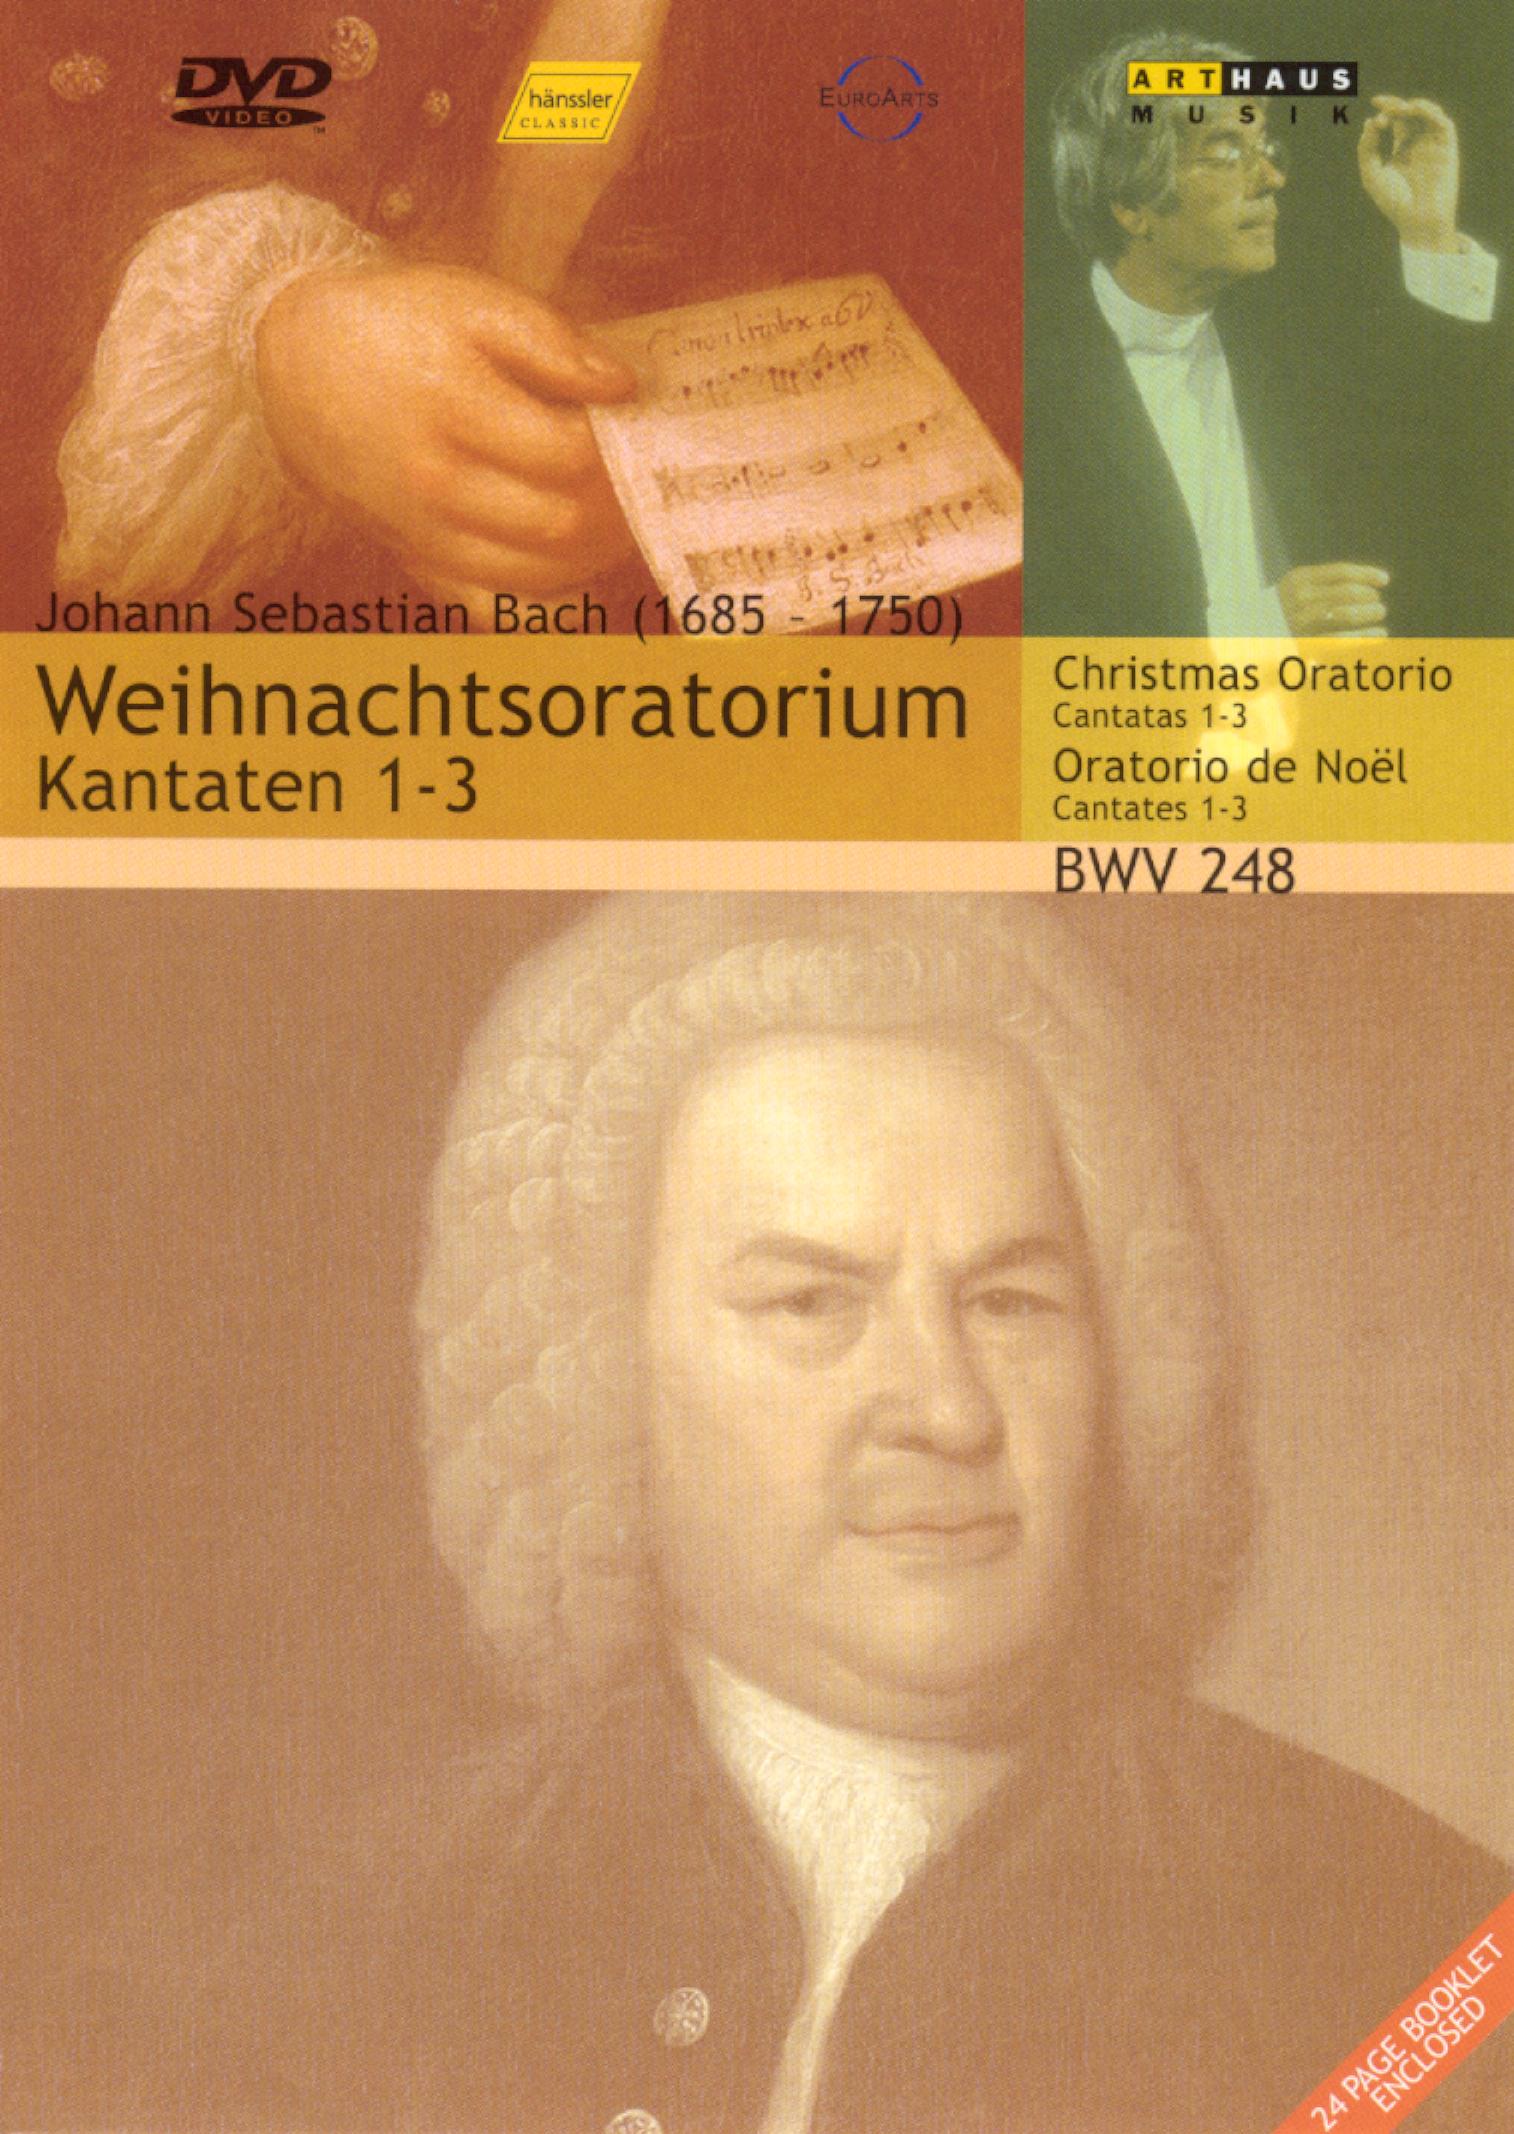 J. S. Bach: Weihnachtsoratorium - Christmas Oratorio cover art